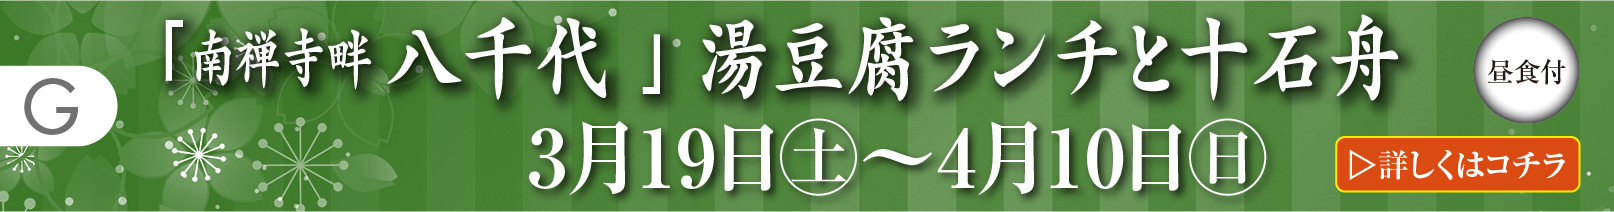 G:「南禅寺畔 八千代」湯豆腐ランチと十石舟(昼食付)